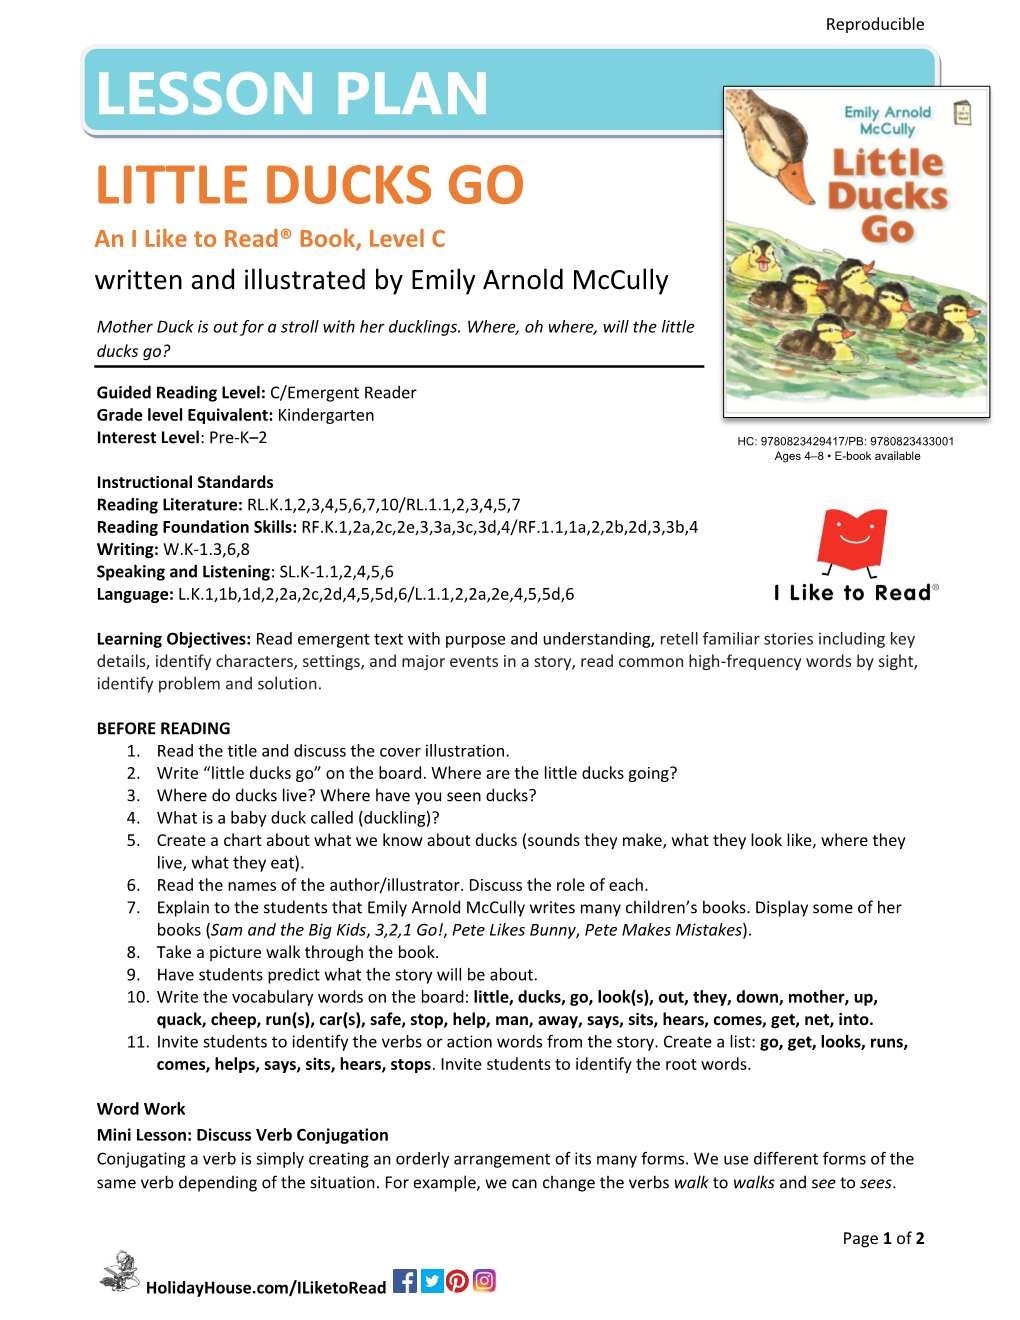 Lesson Plan Little Ducks Go